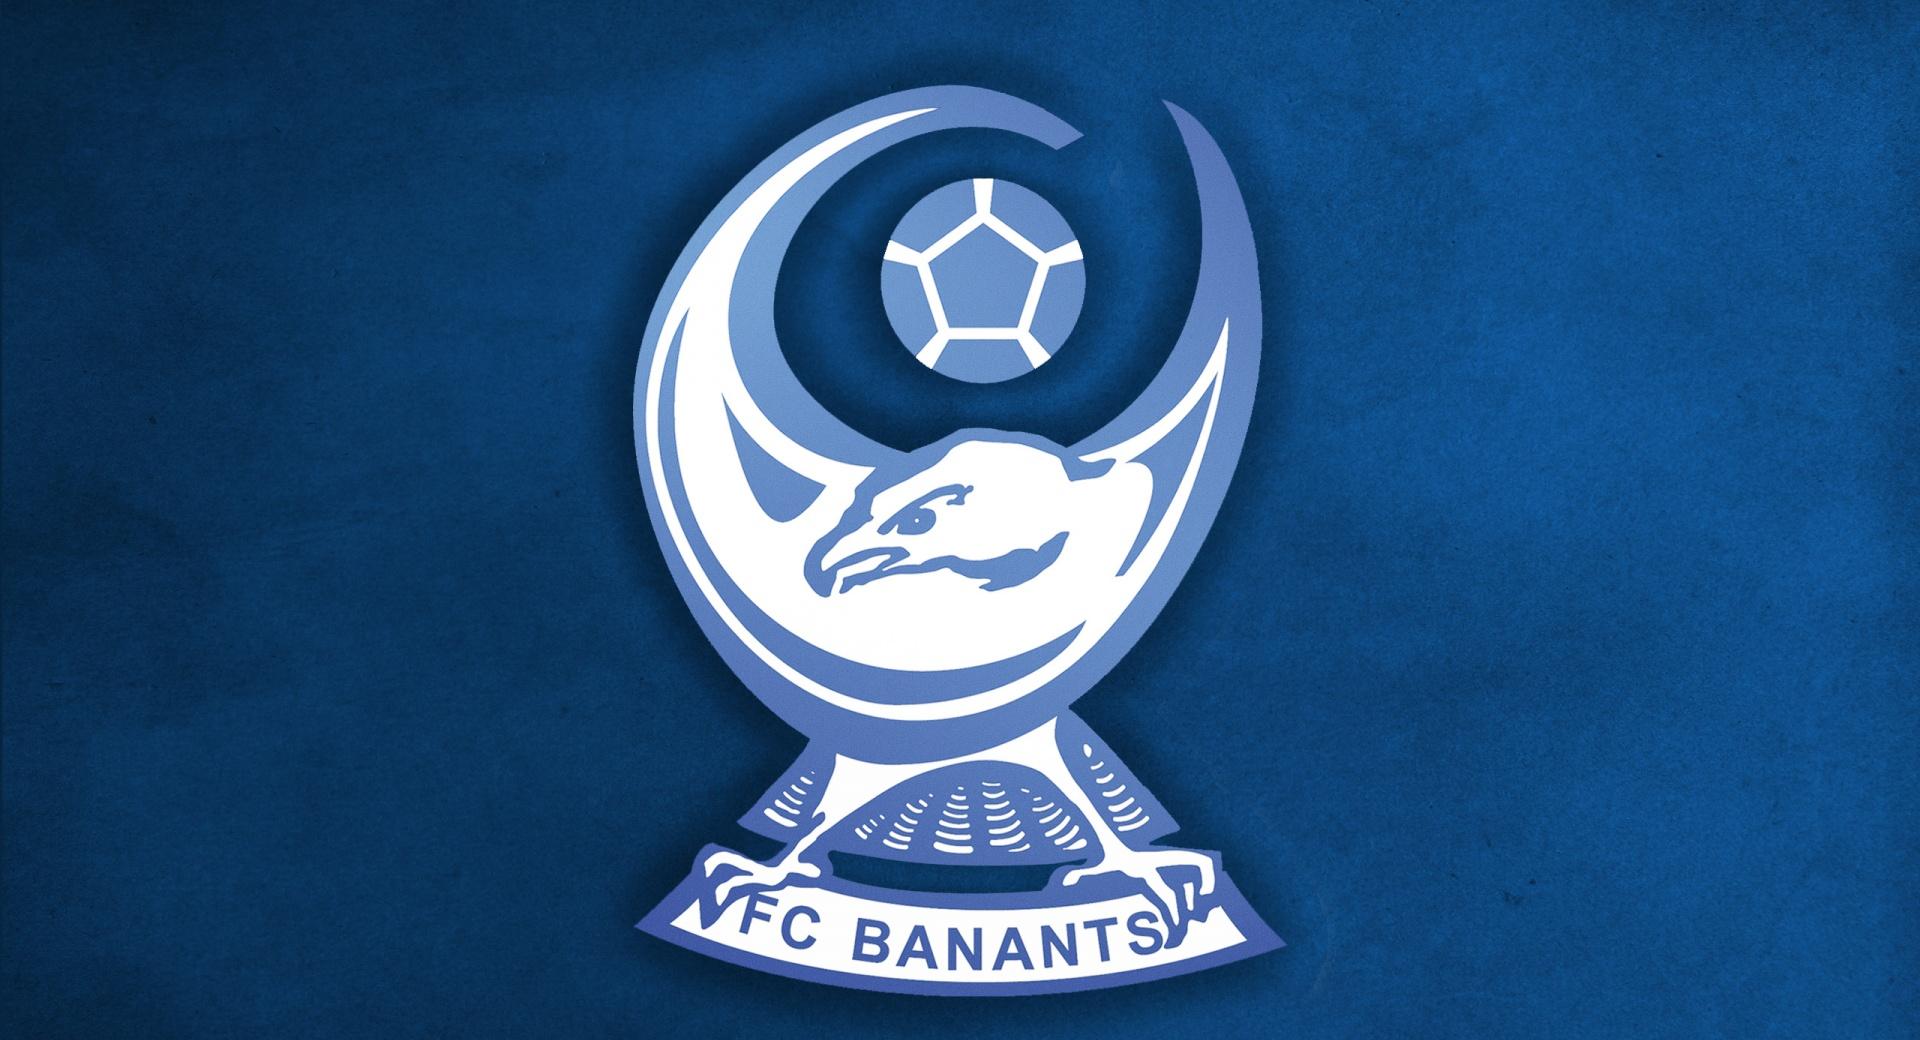 FC Banants wallpapers HD quality